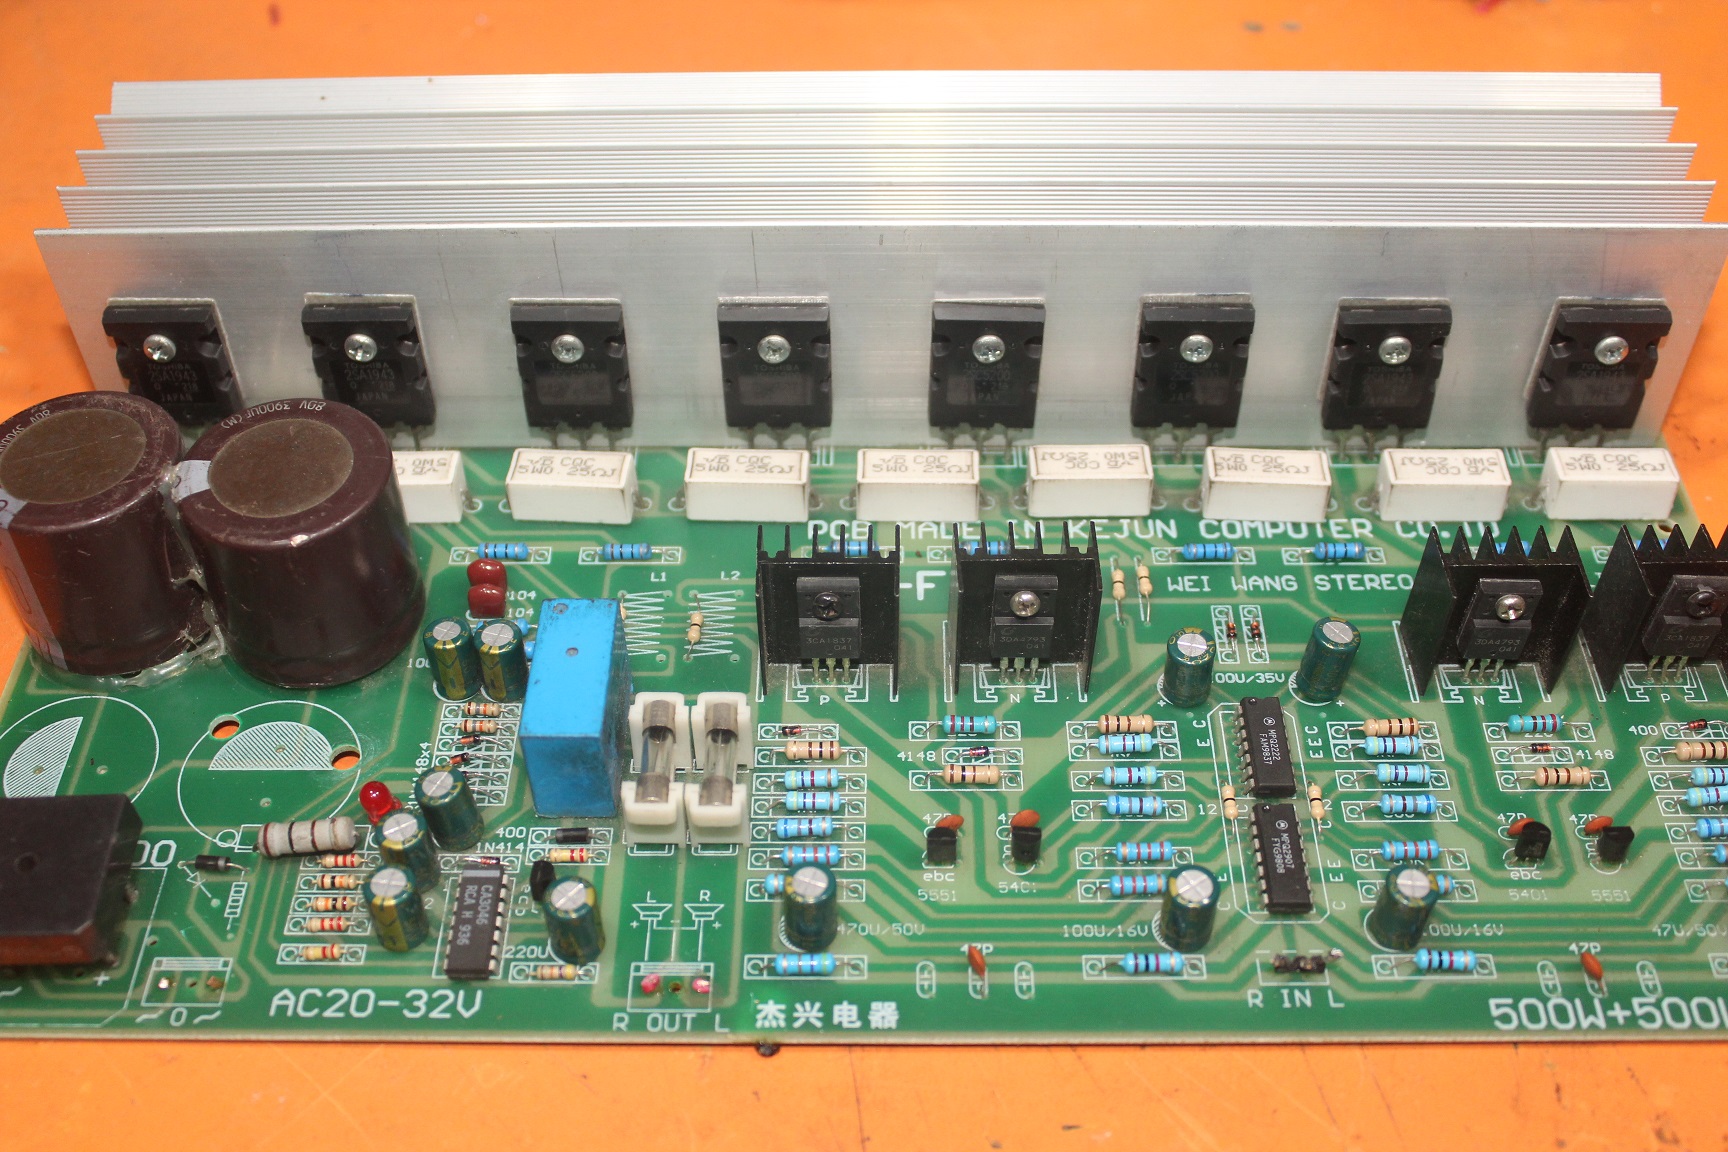 1000 watts amplifier circuit diagram using 2sc5200 and 2sa1943